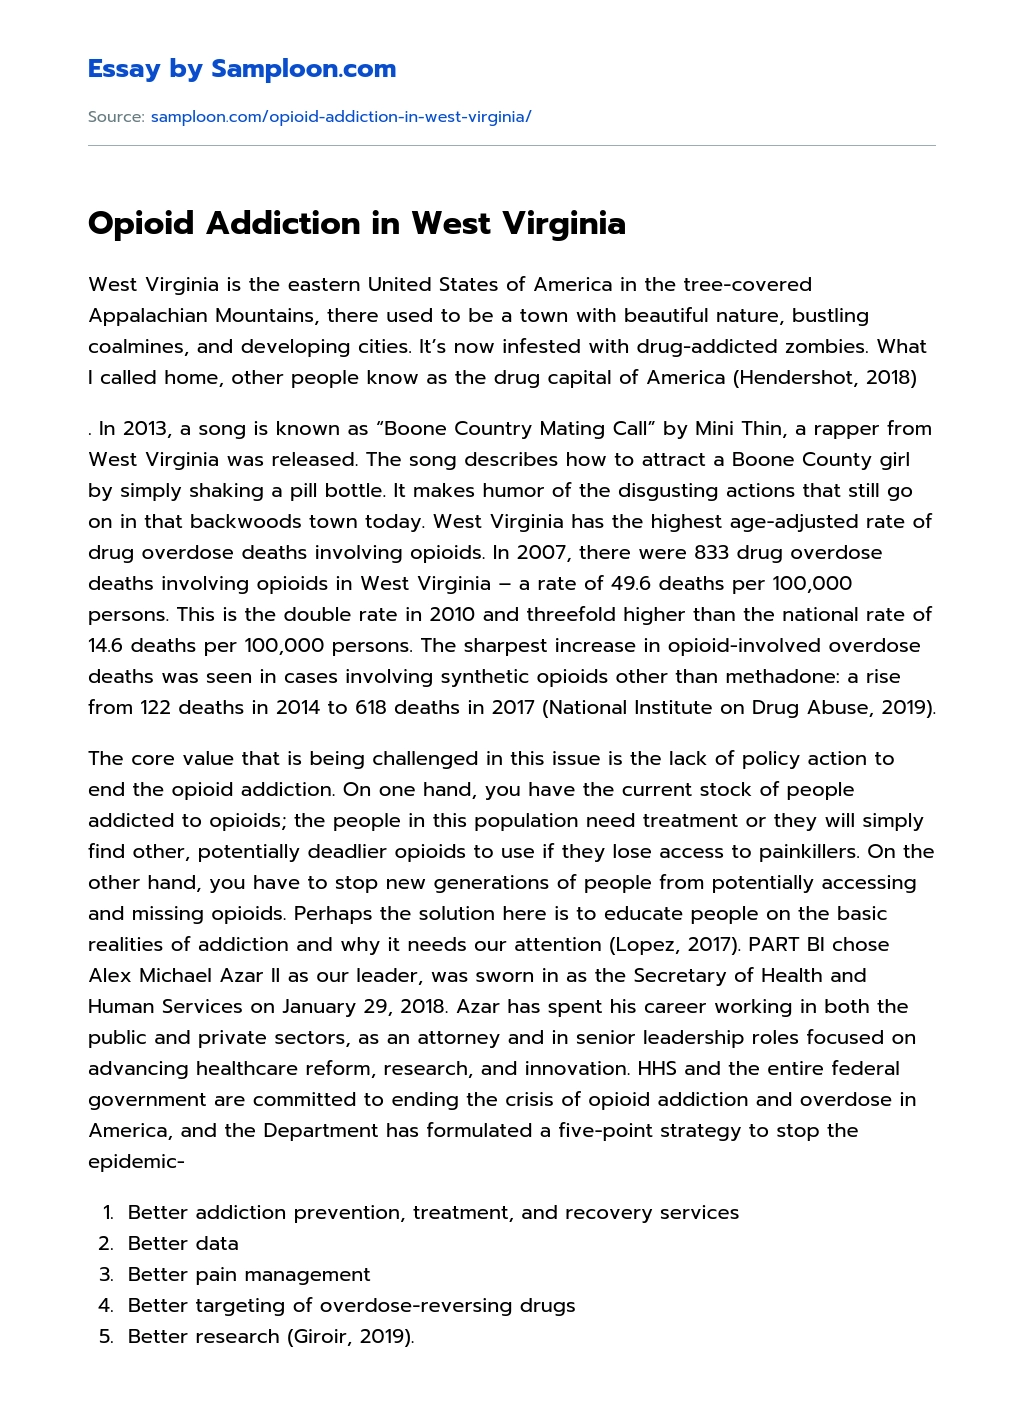 Opioid Addiction in West Virginia essay